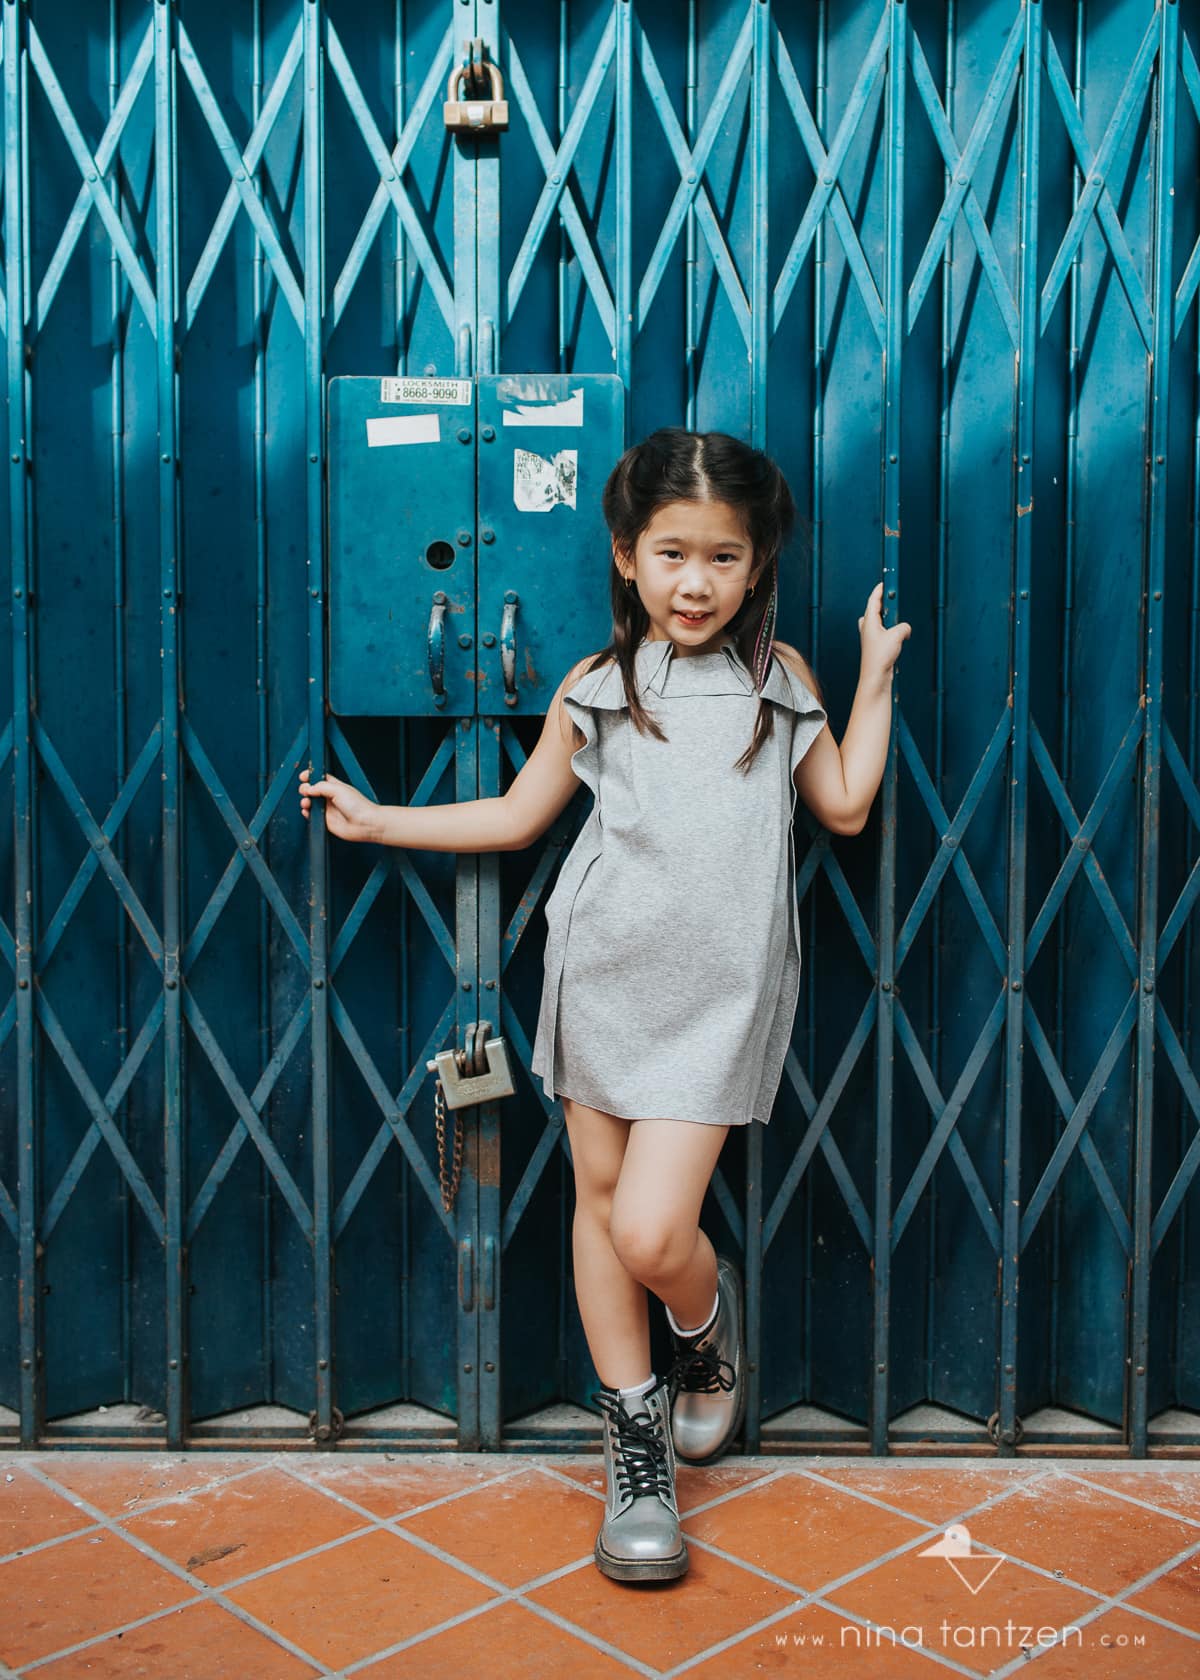 urban child portraits in singapore